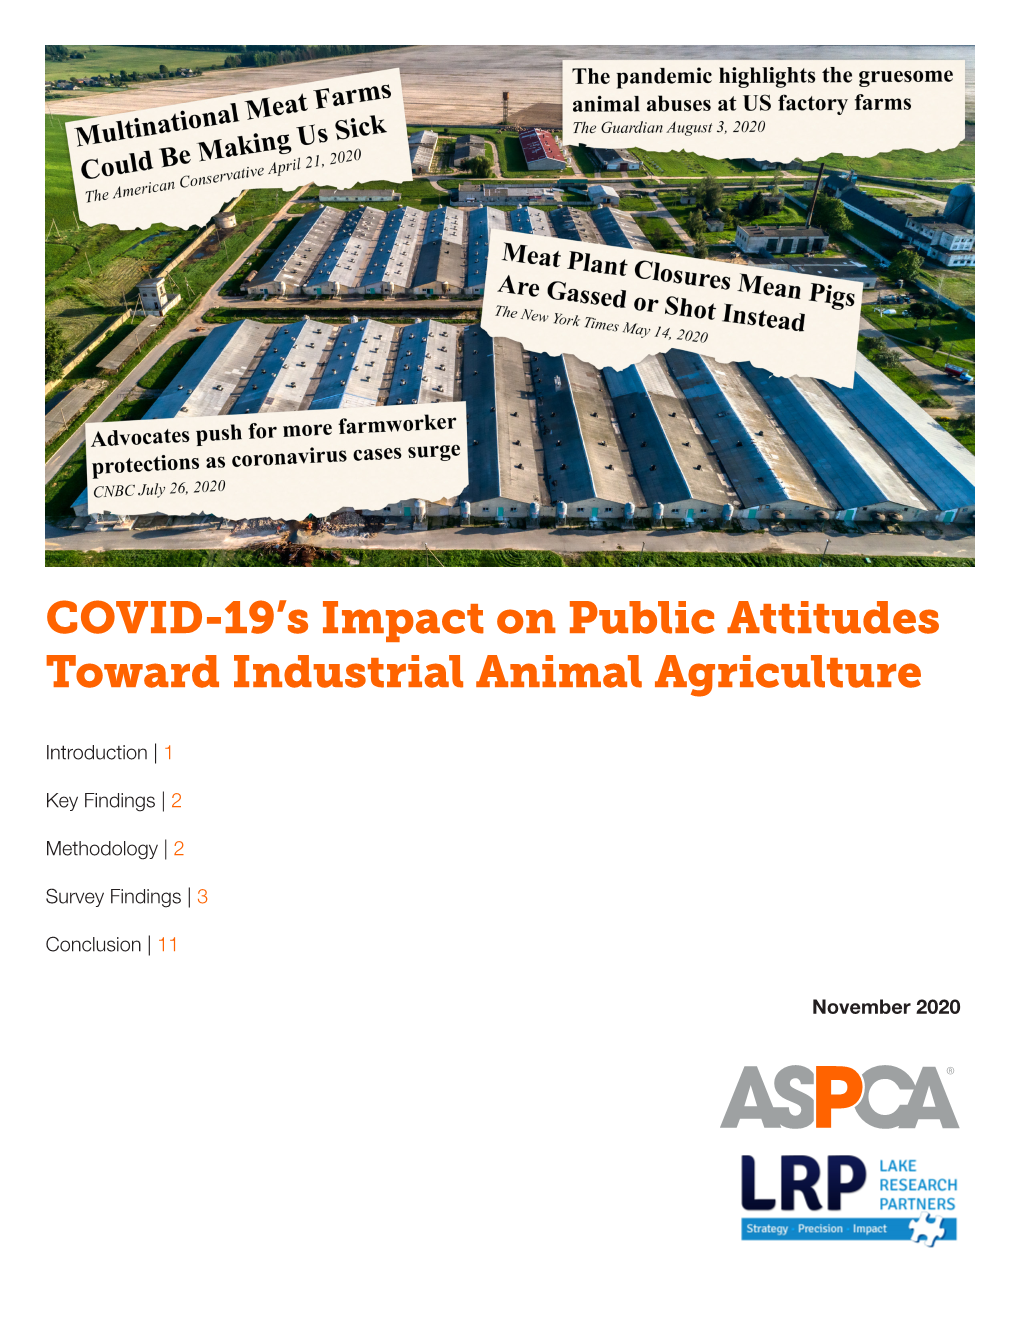 COVID-19'S Impact on Public Attitudes Toward Industrial Animal Agriculture